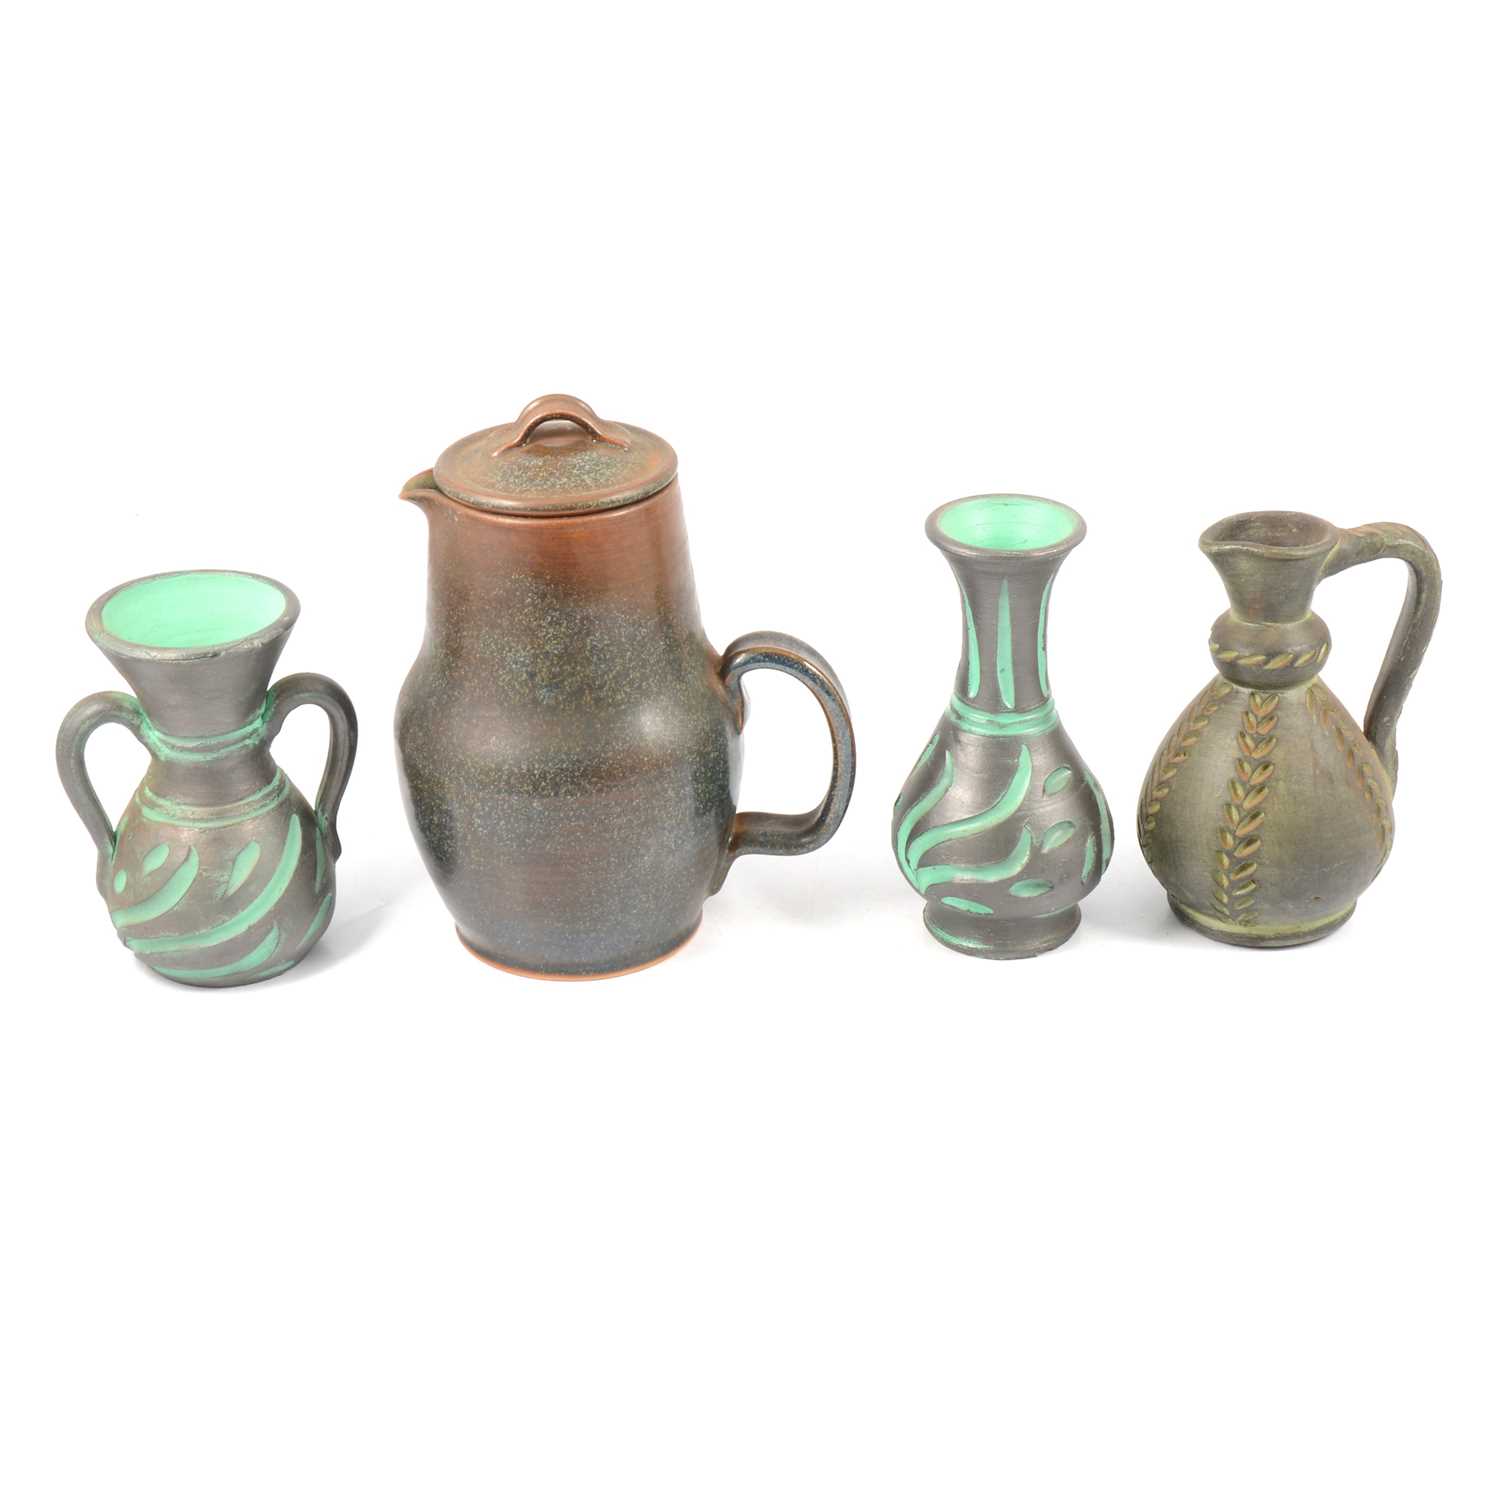 Lot 15 - Small selection of Studio ceramics.